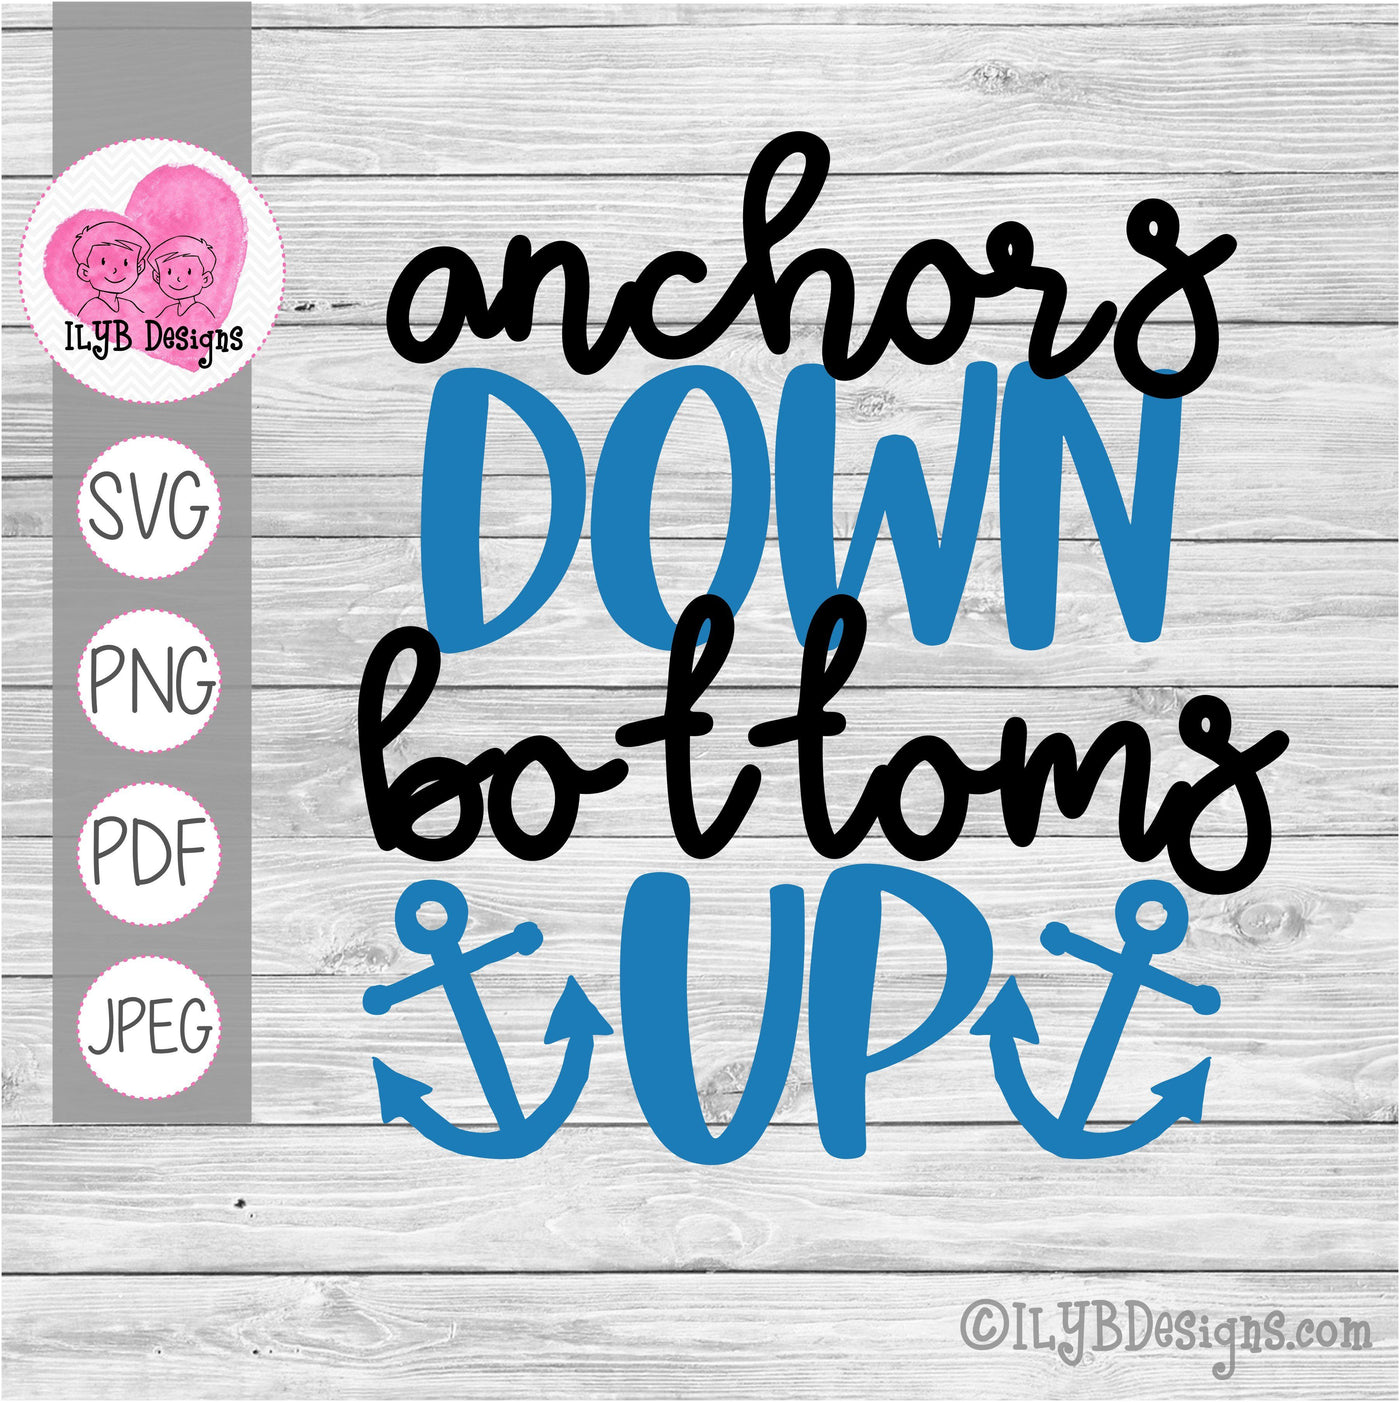 Anchors Down Bottoms Up SVG, PNG, JPEG, PDF Cut Files - ILYB Designs